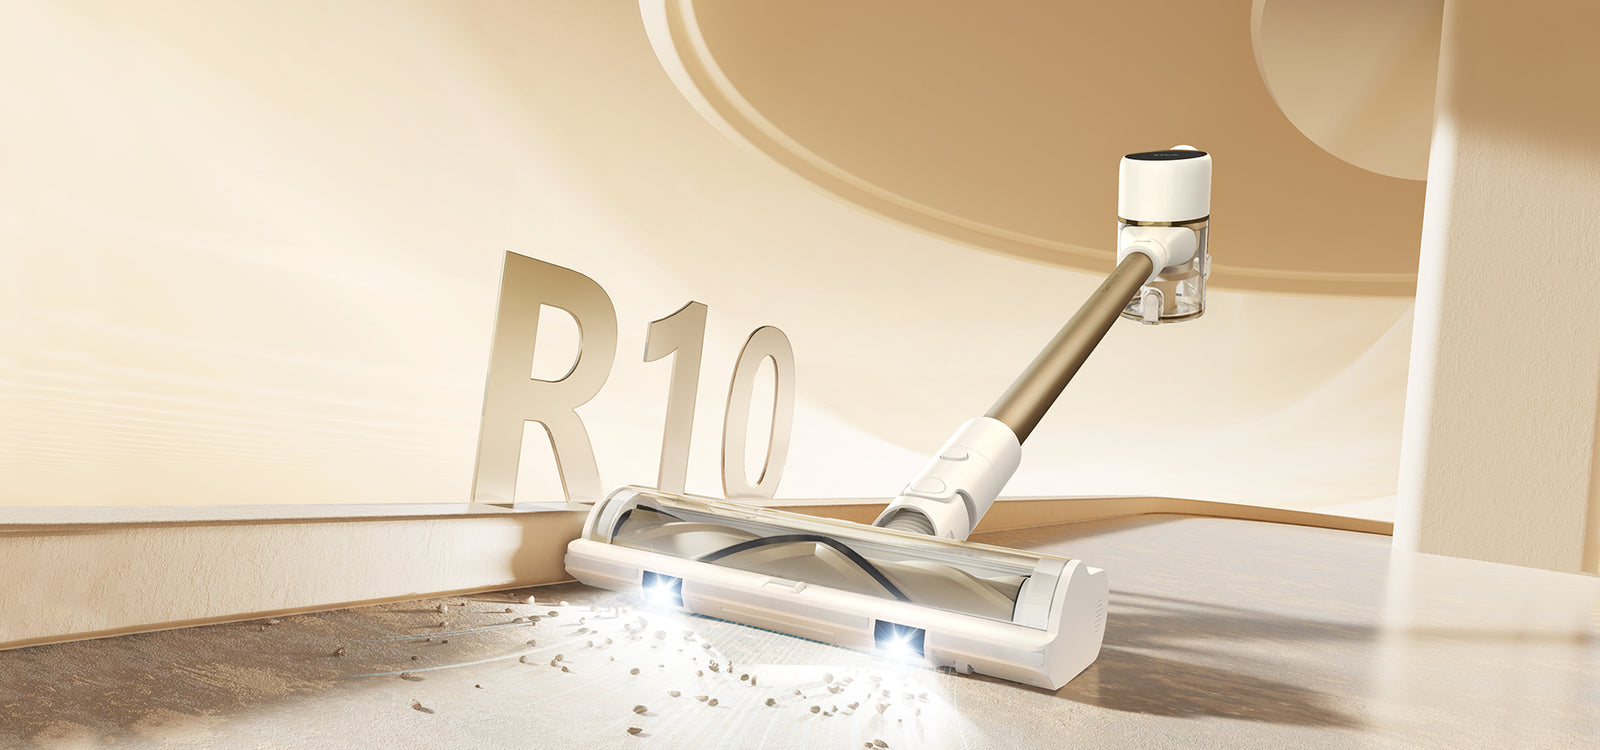 R10 Cordless Vacuum – Dreame Global